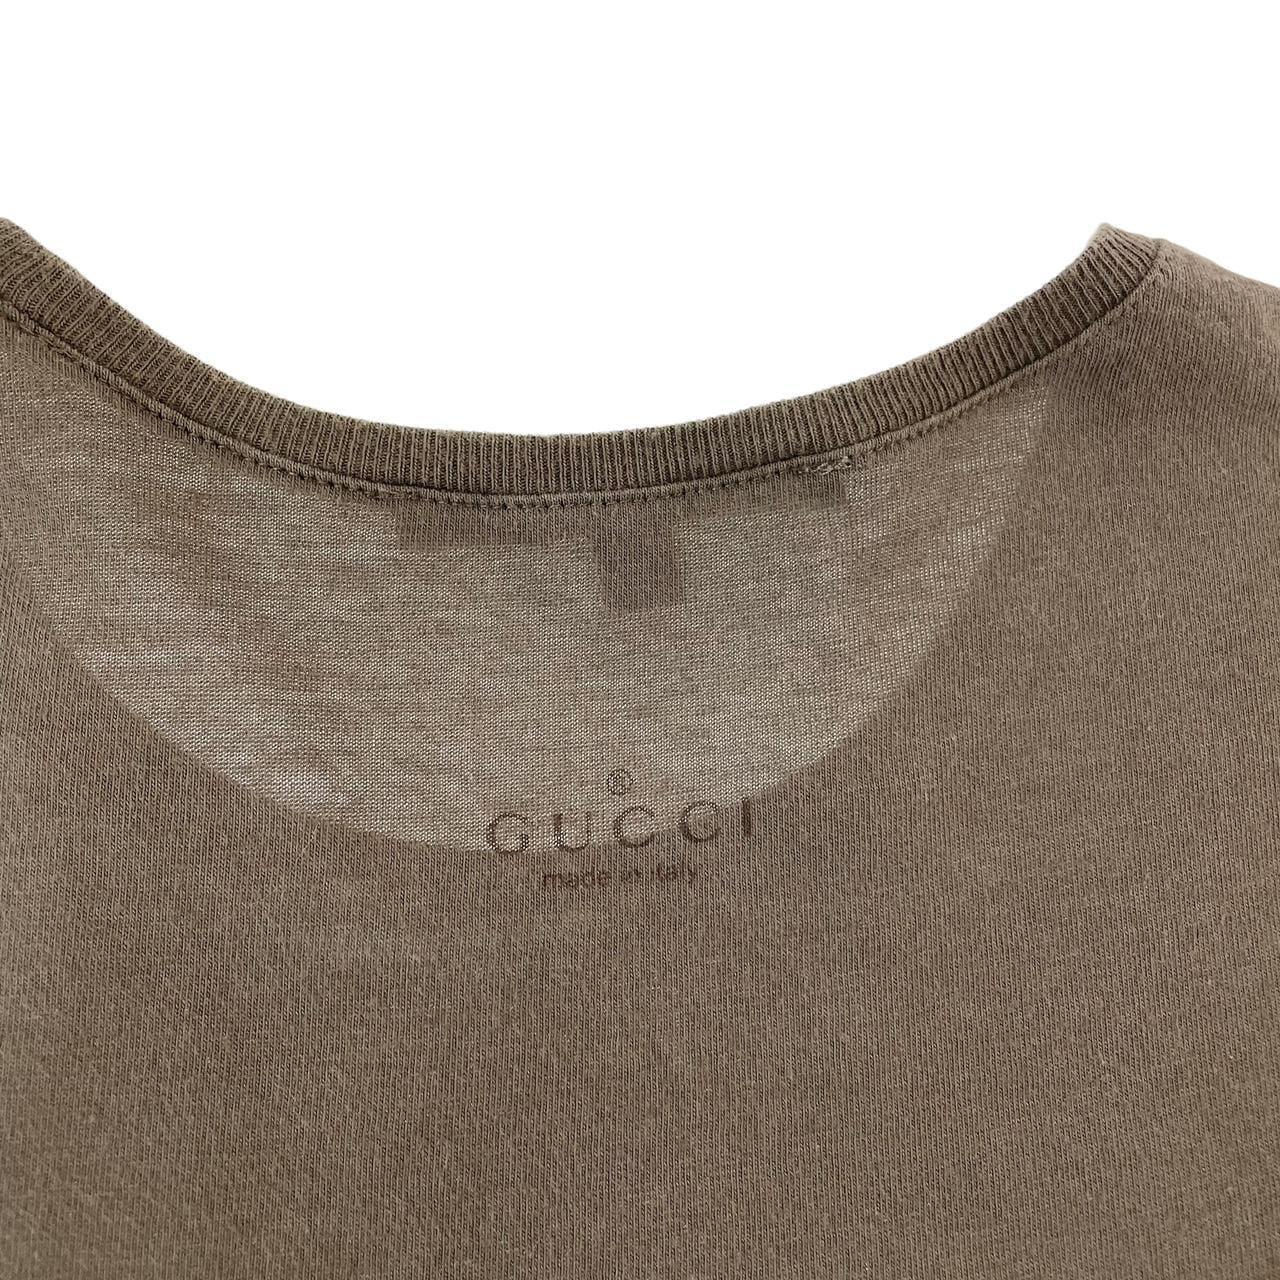 Vintage Gucci logo t shirt woman’s size S - Known Source